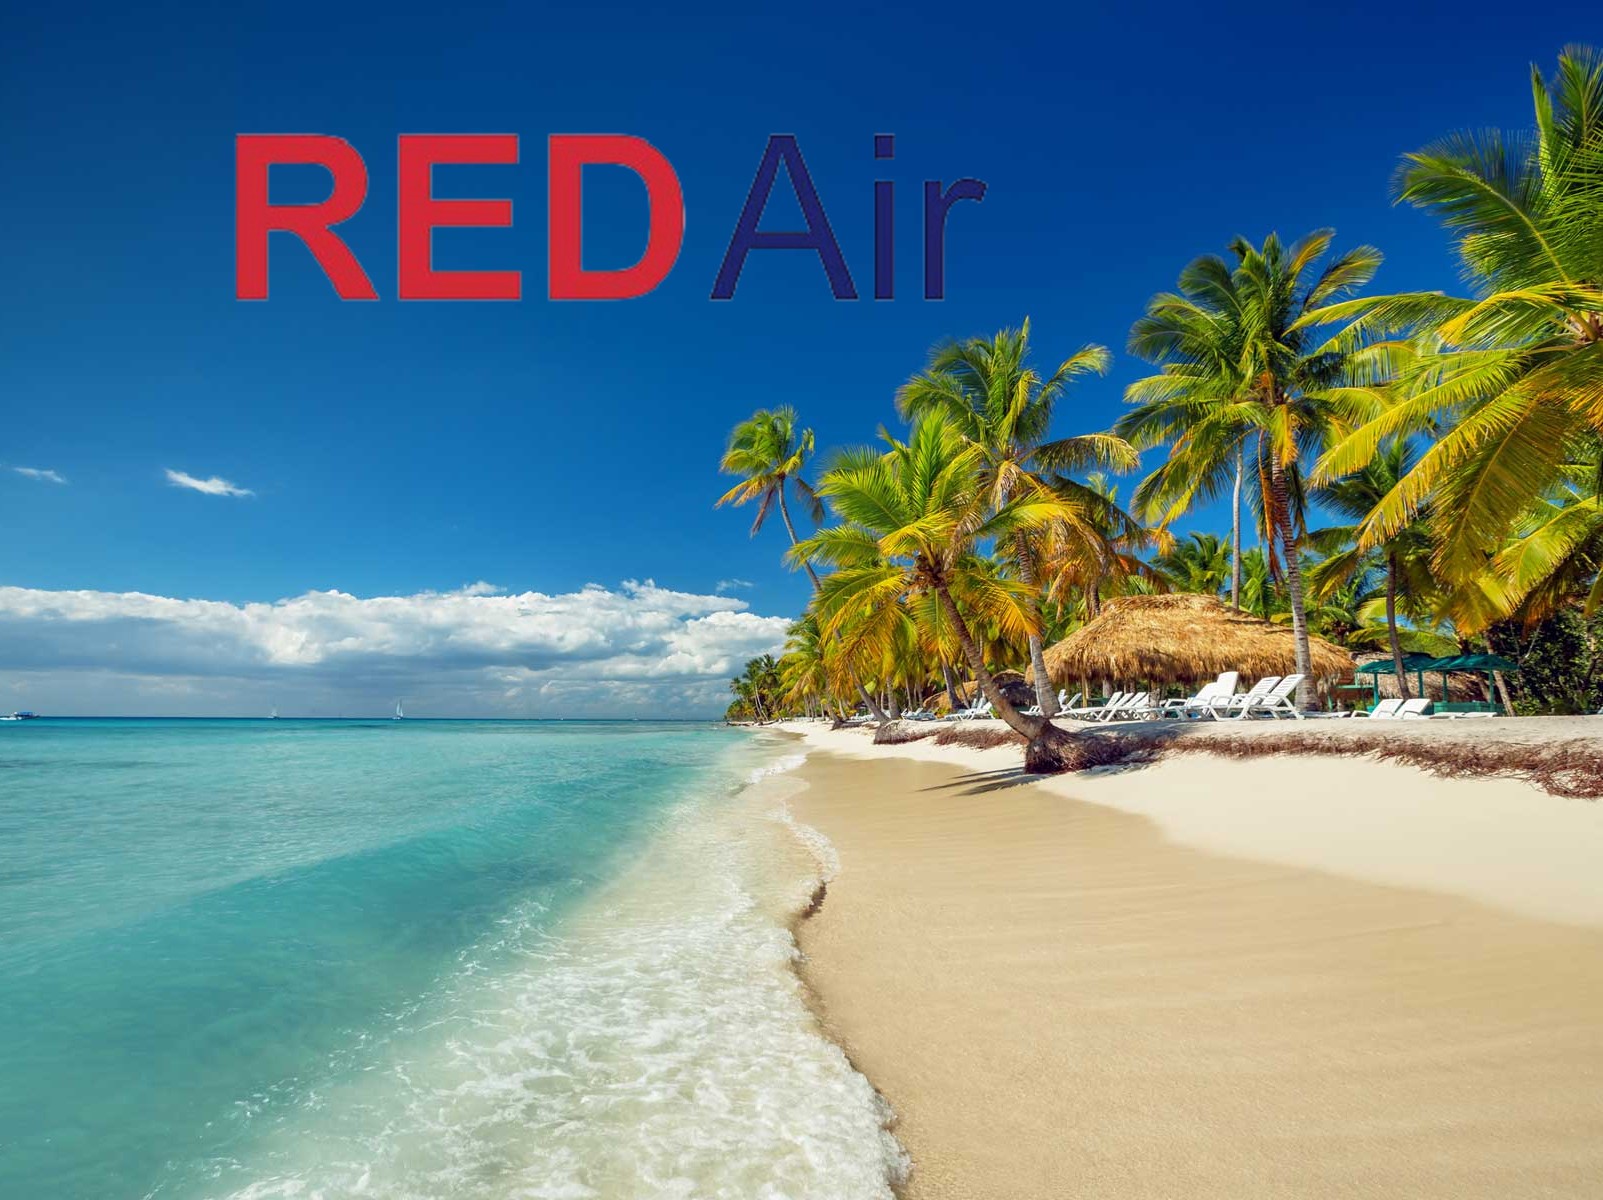 RED Air logo y playa dominicana